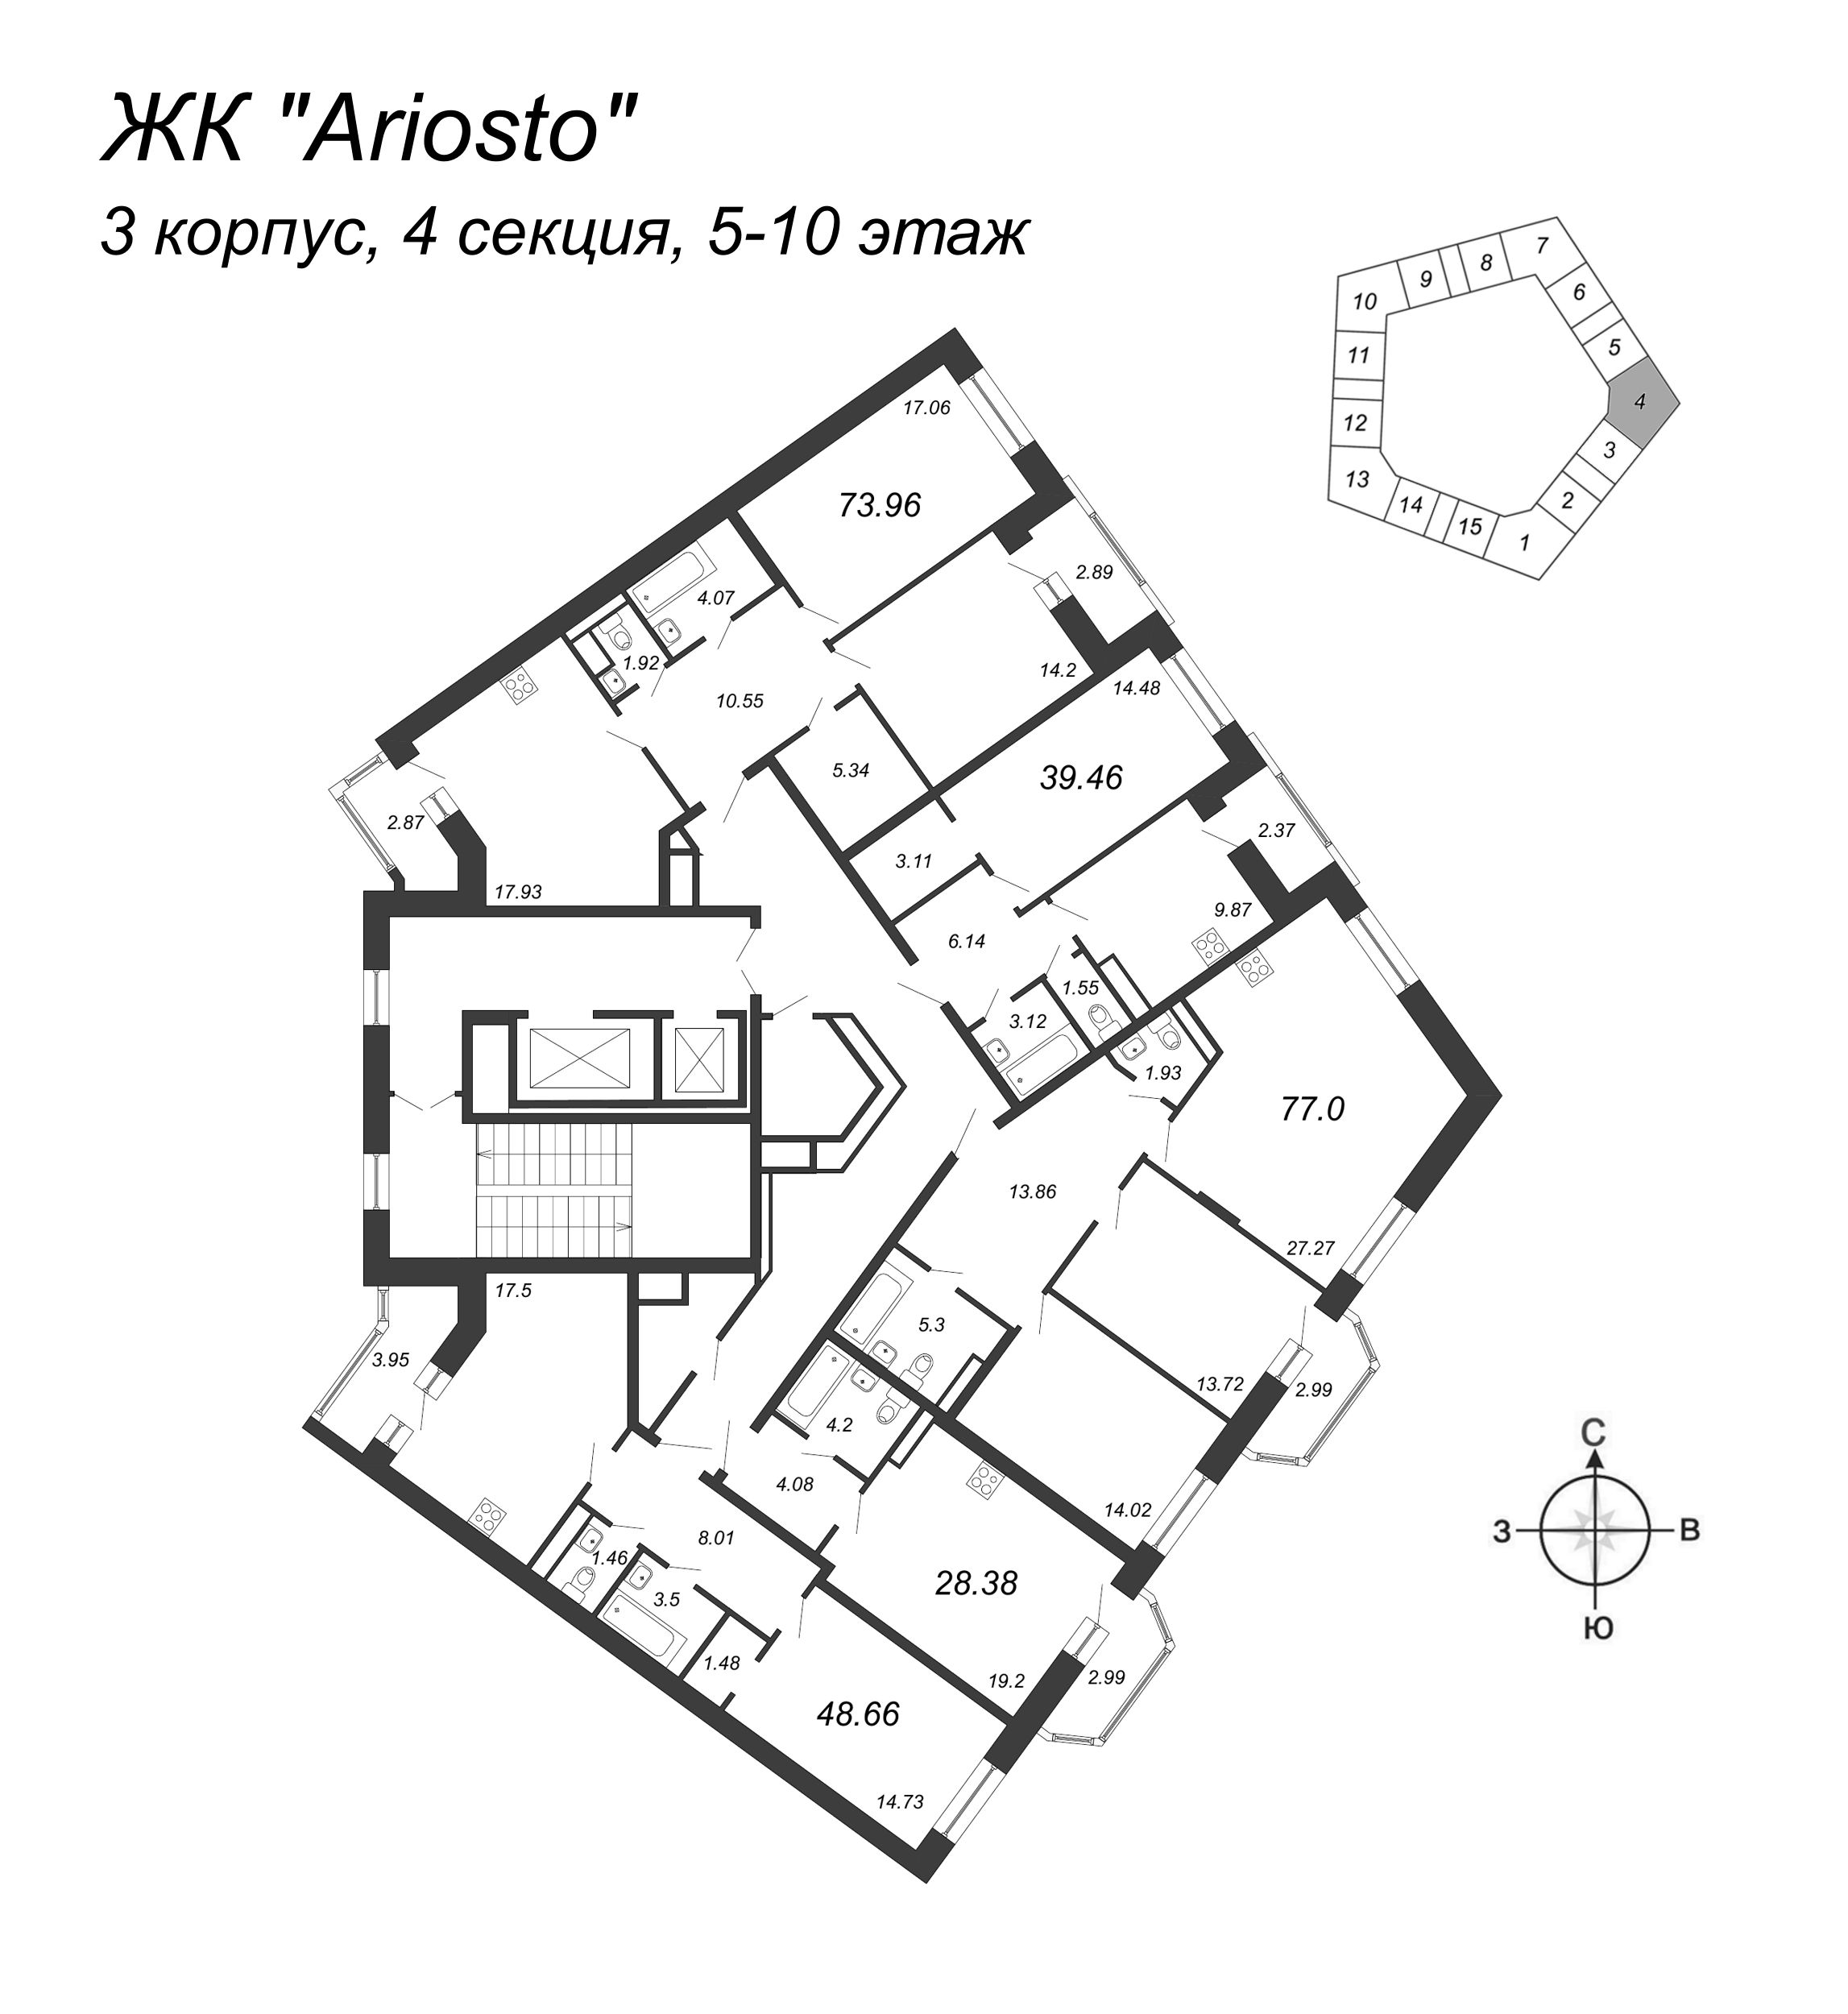 3-комнатная (Евро) квартира, 73.96 м² - планировка этажа